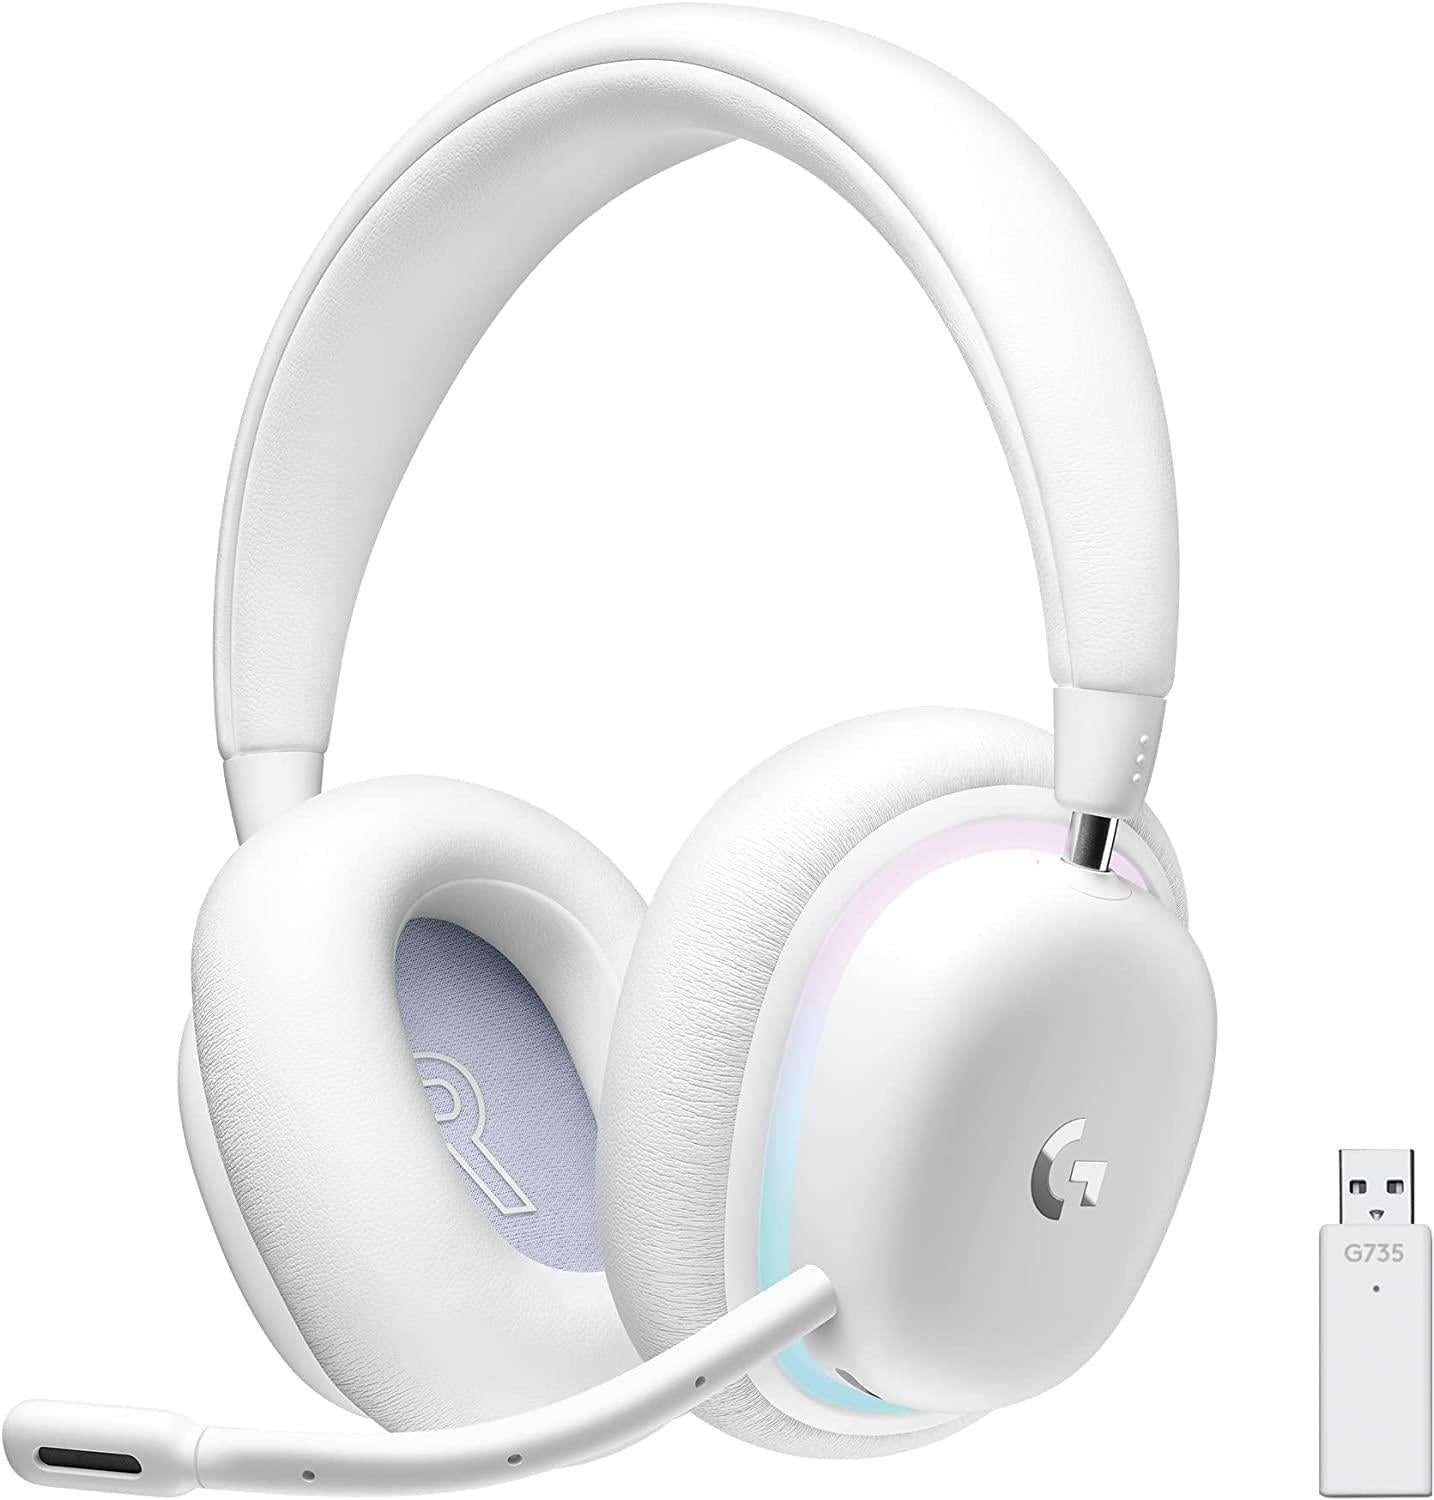 Logitech G, Logitech G735 Wireless Gaming Headset - White